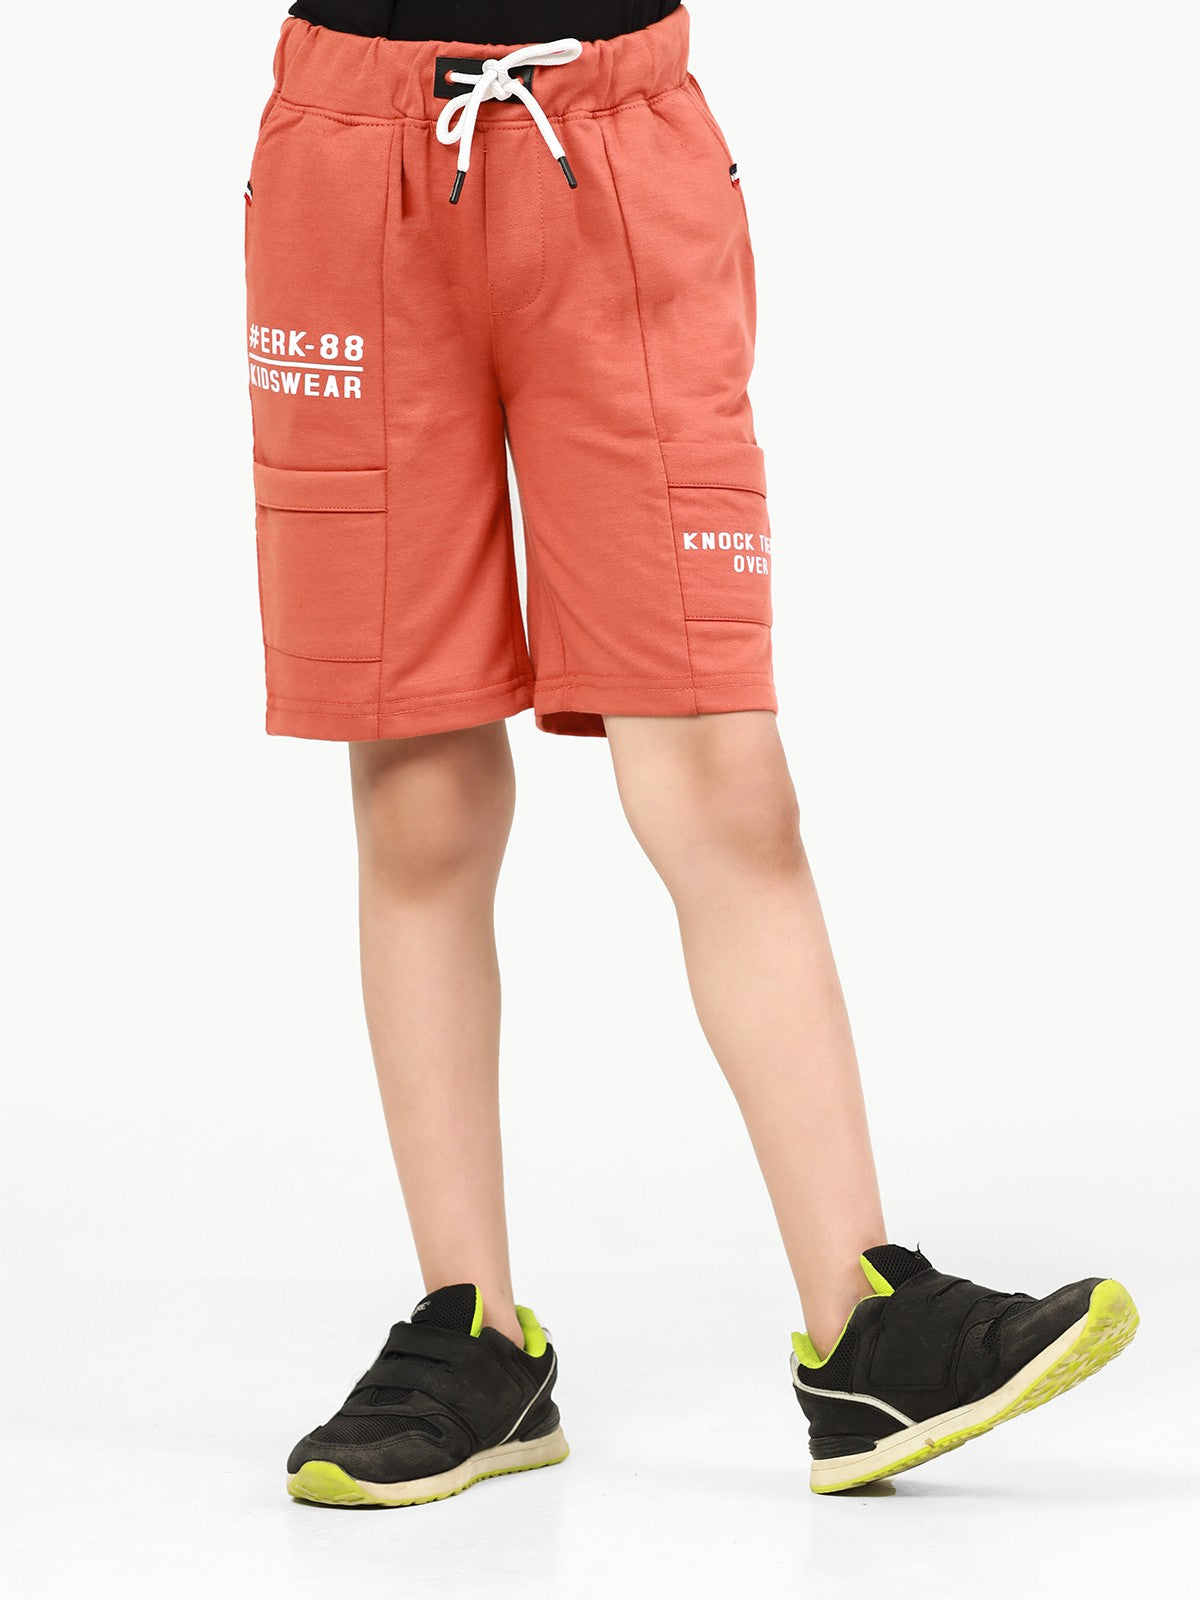 Boy's Rust Shorts - EBBSK22-005